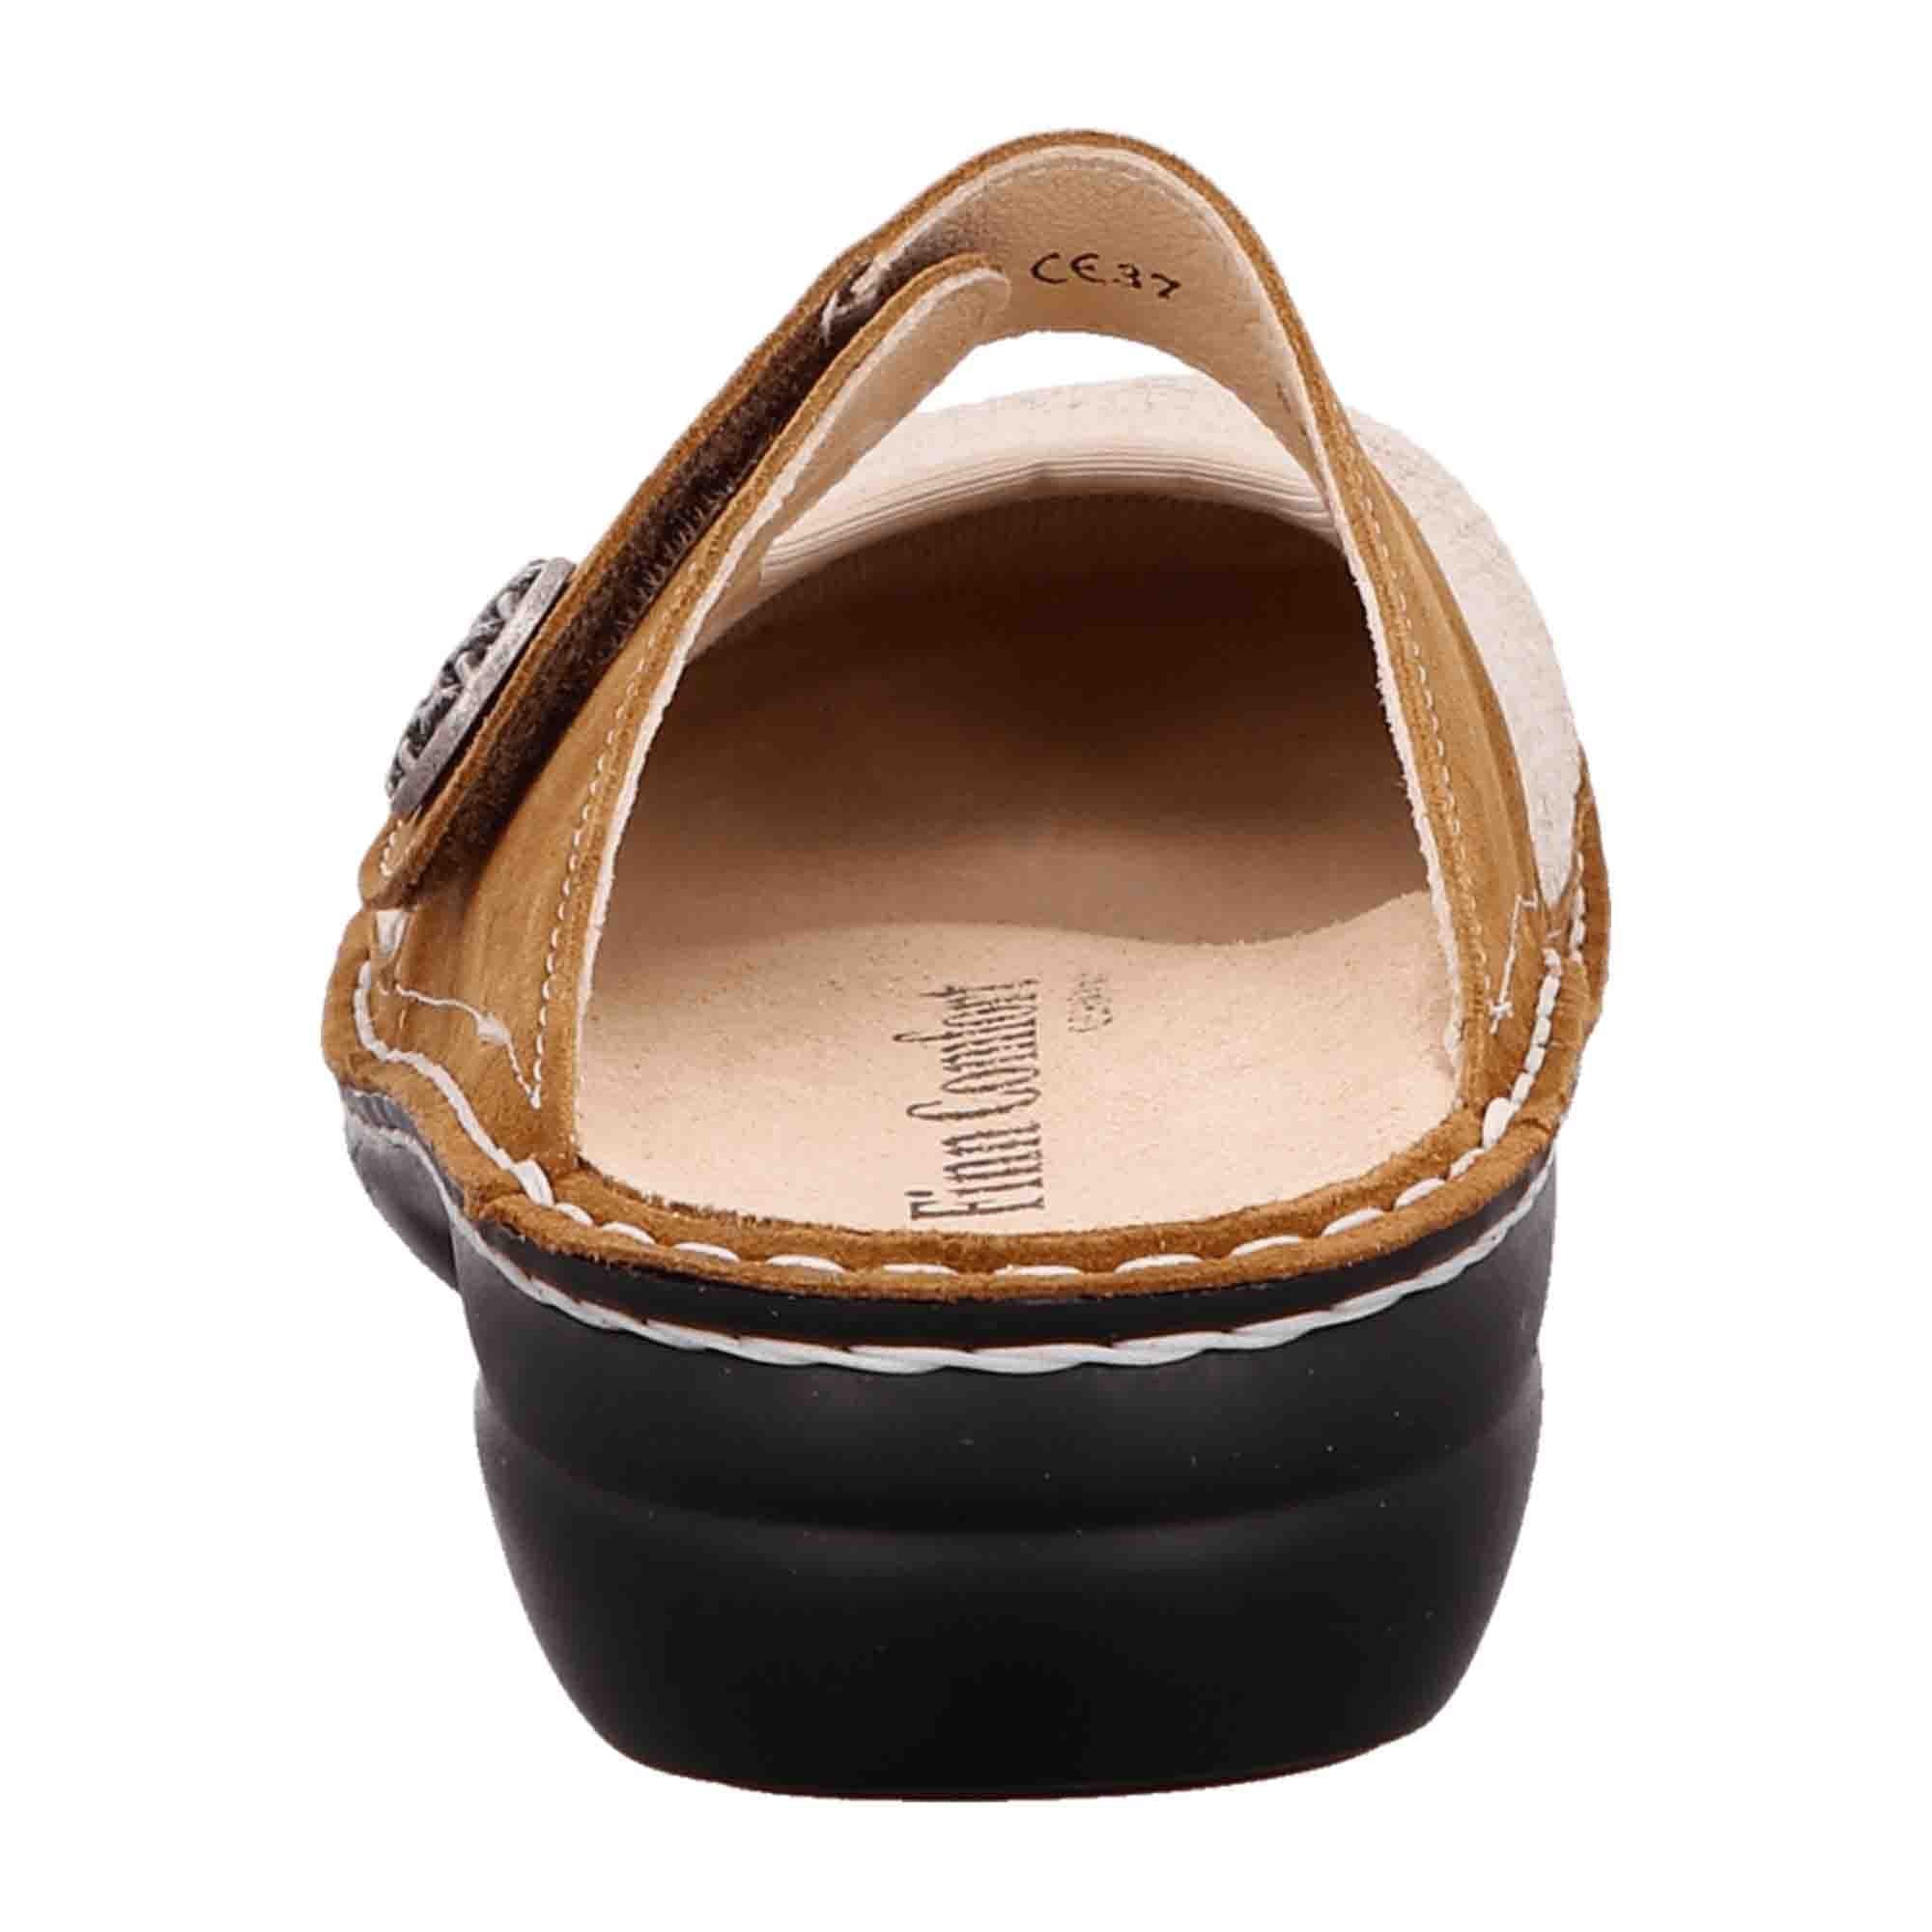 Finn Comfort Asinara Women’s Sandals, Stylish & Comfortable, Beige